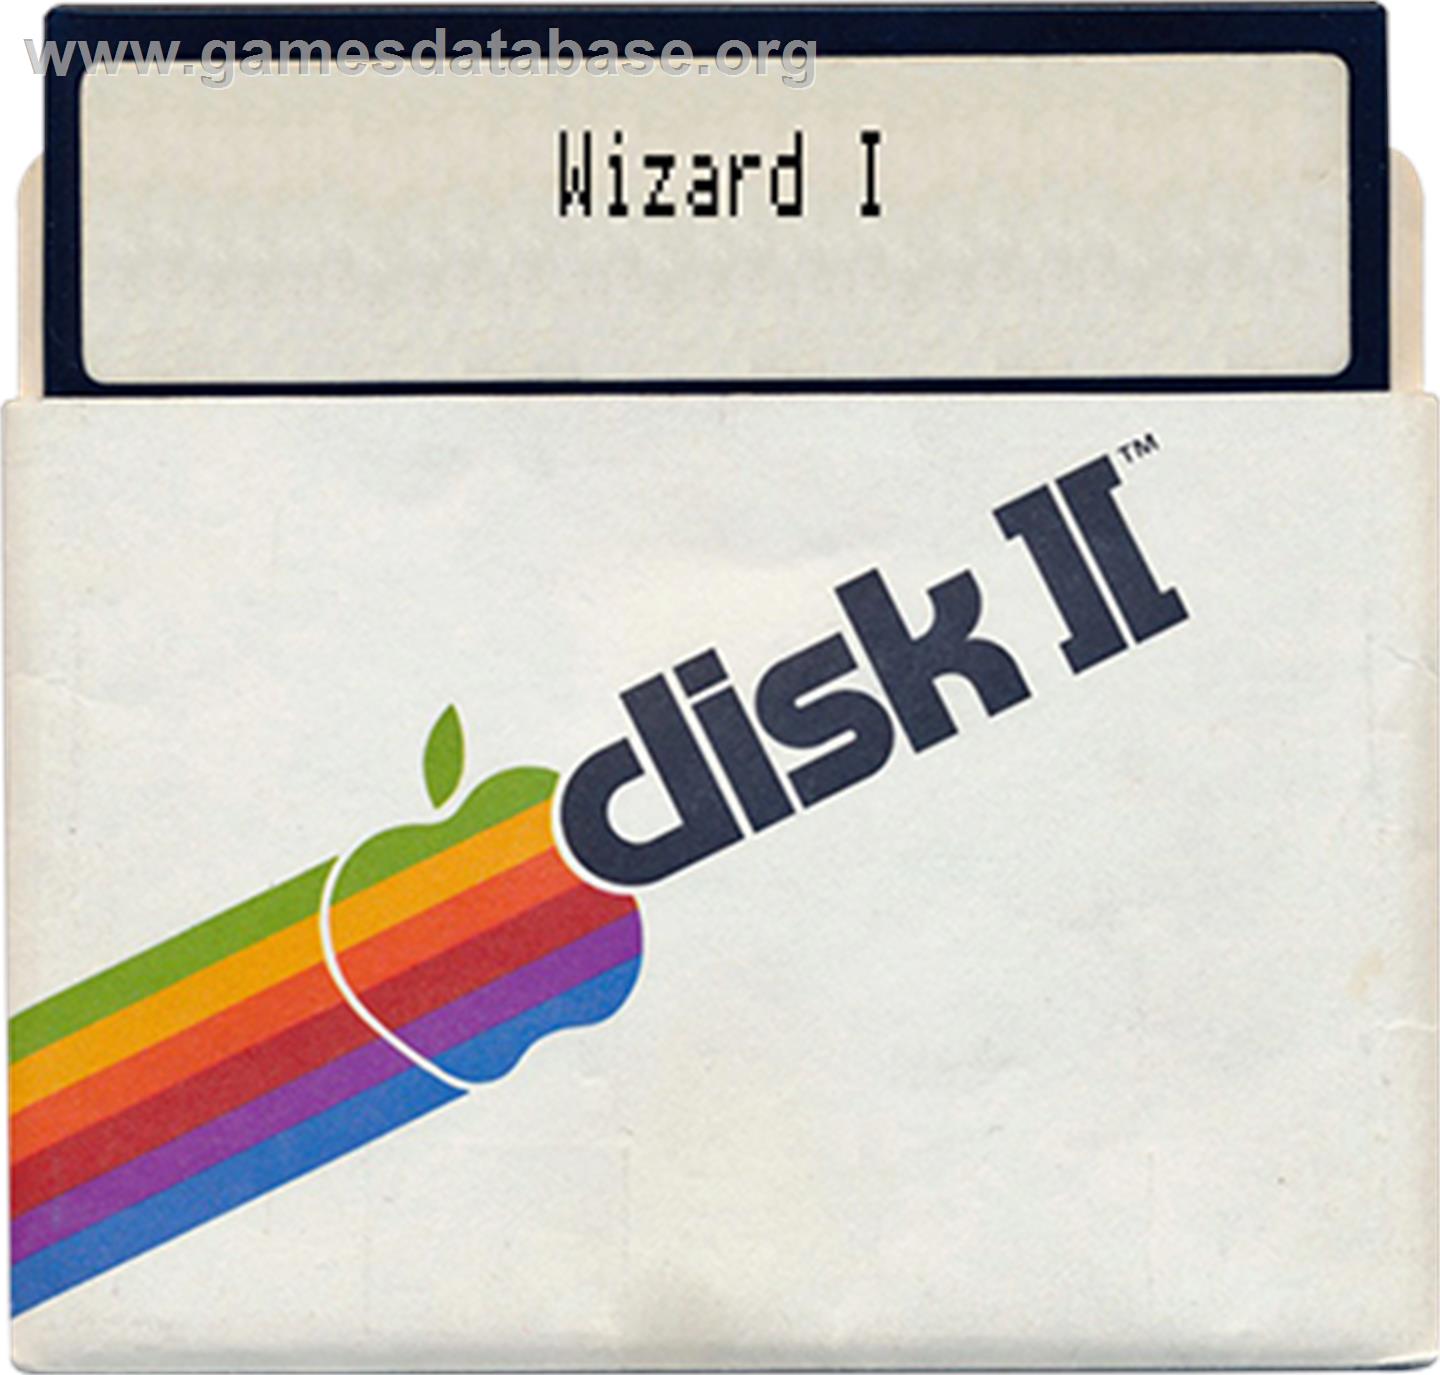 Wizard of Oz - Apple II - Artwork - Disc